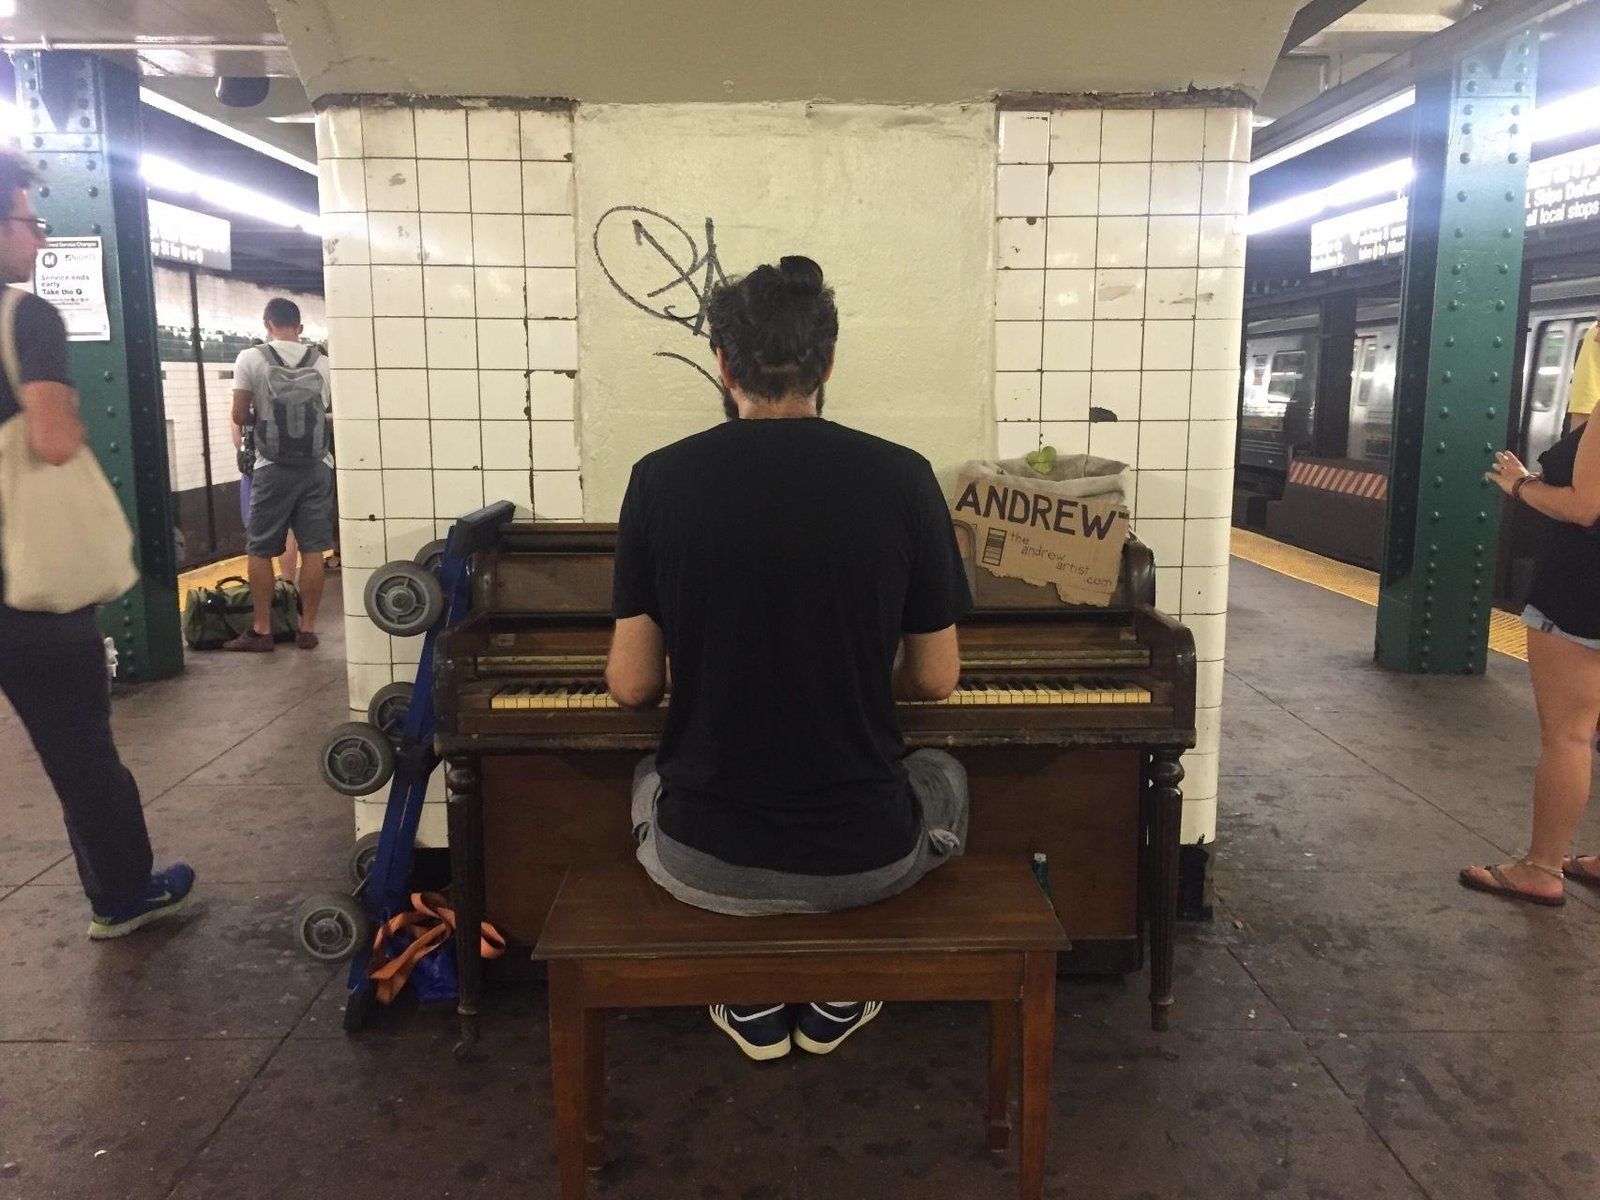 A man sitting on a subway platform playing an upright piano